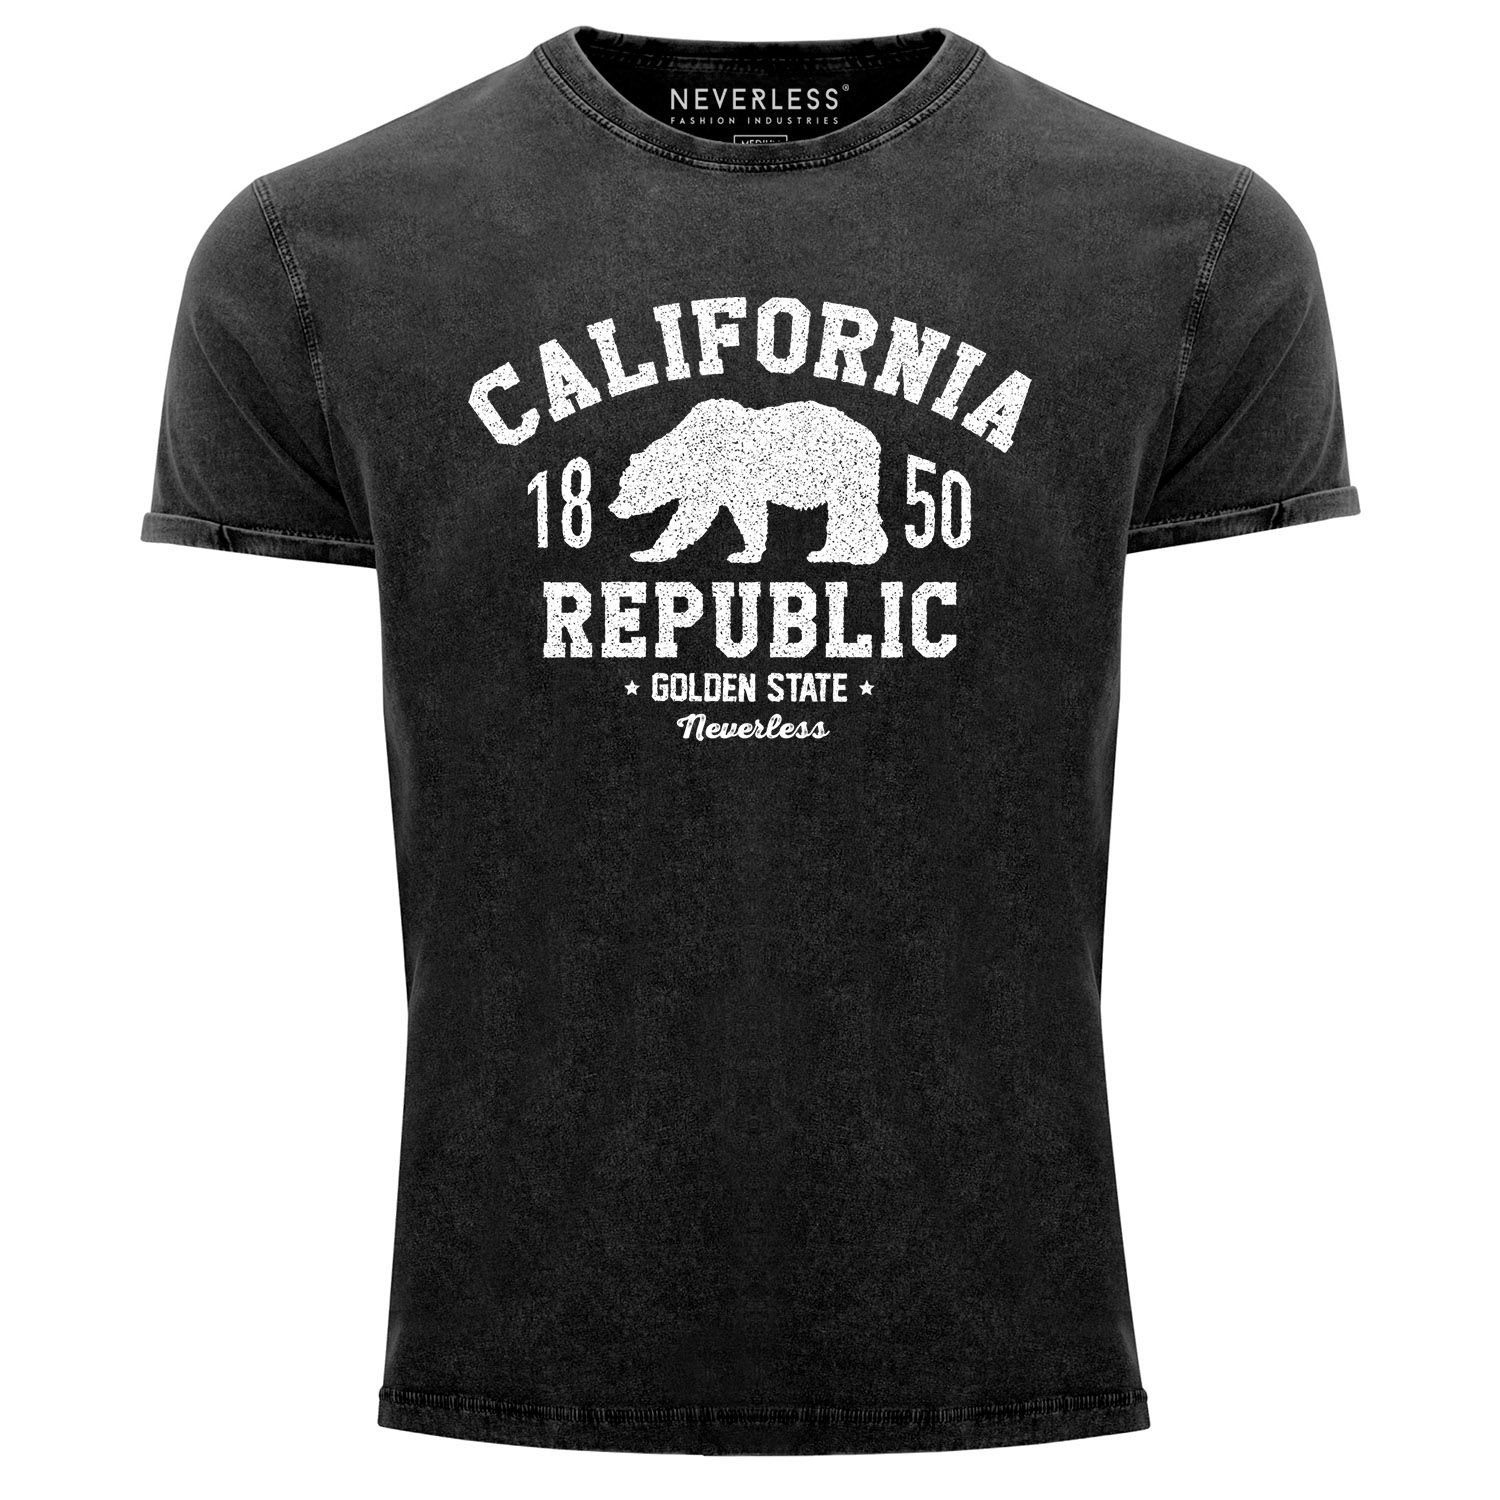 Neverless Print-Shirt Neverless® Herren T-Shirt Vintage Shirt Printshirt California Republic Kalifornien Golden State Grizzly Bär Bear Logo Used Look Slim Fit mit Print schwarz